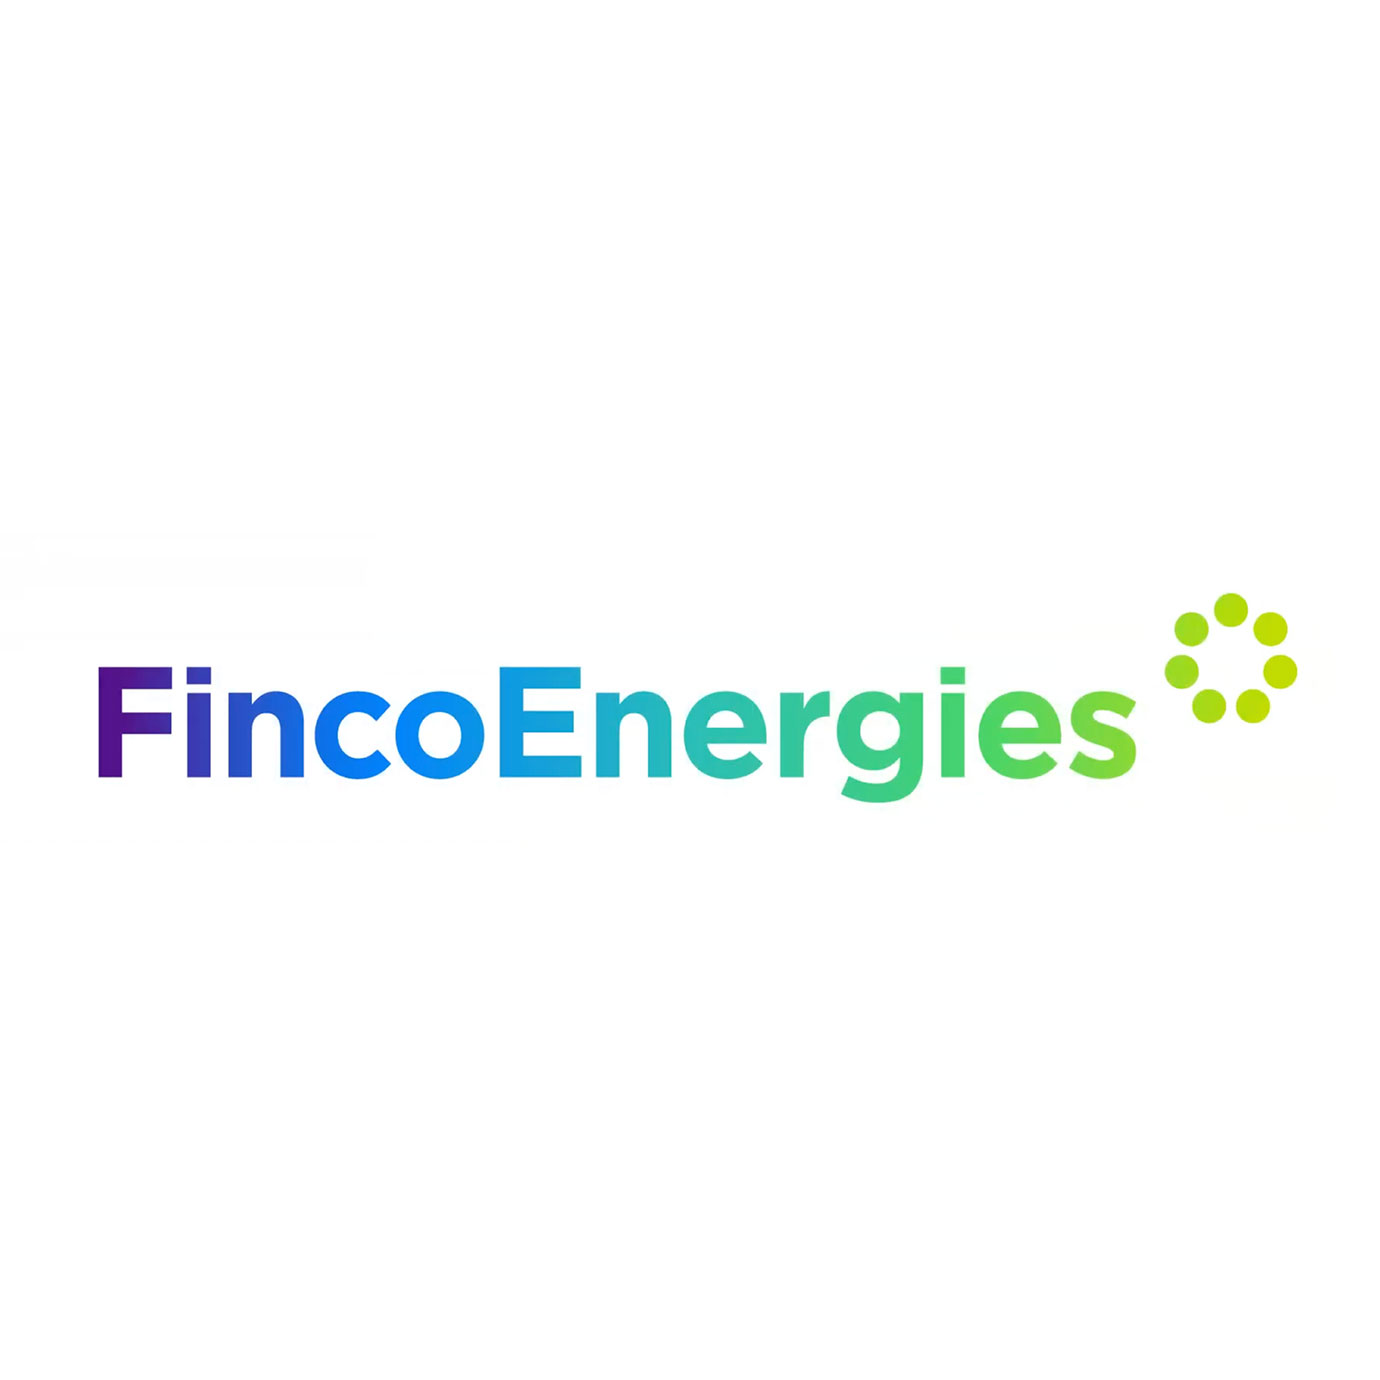 FincoEnergies-logo-header-1x1